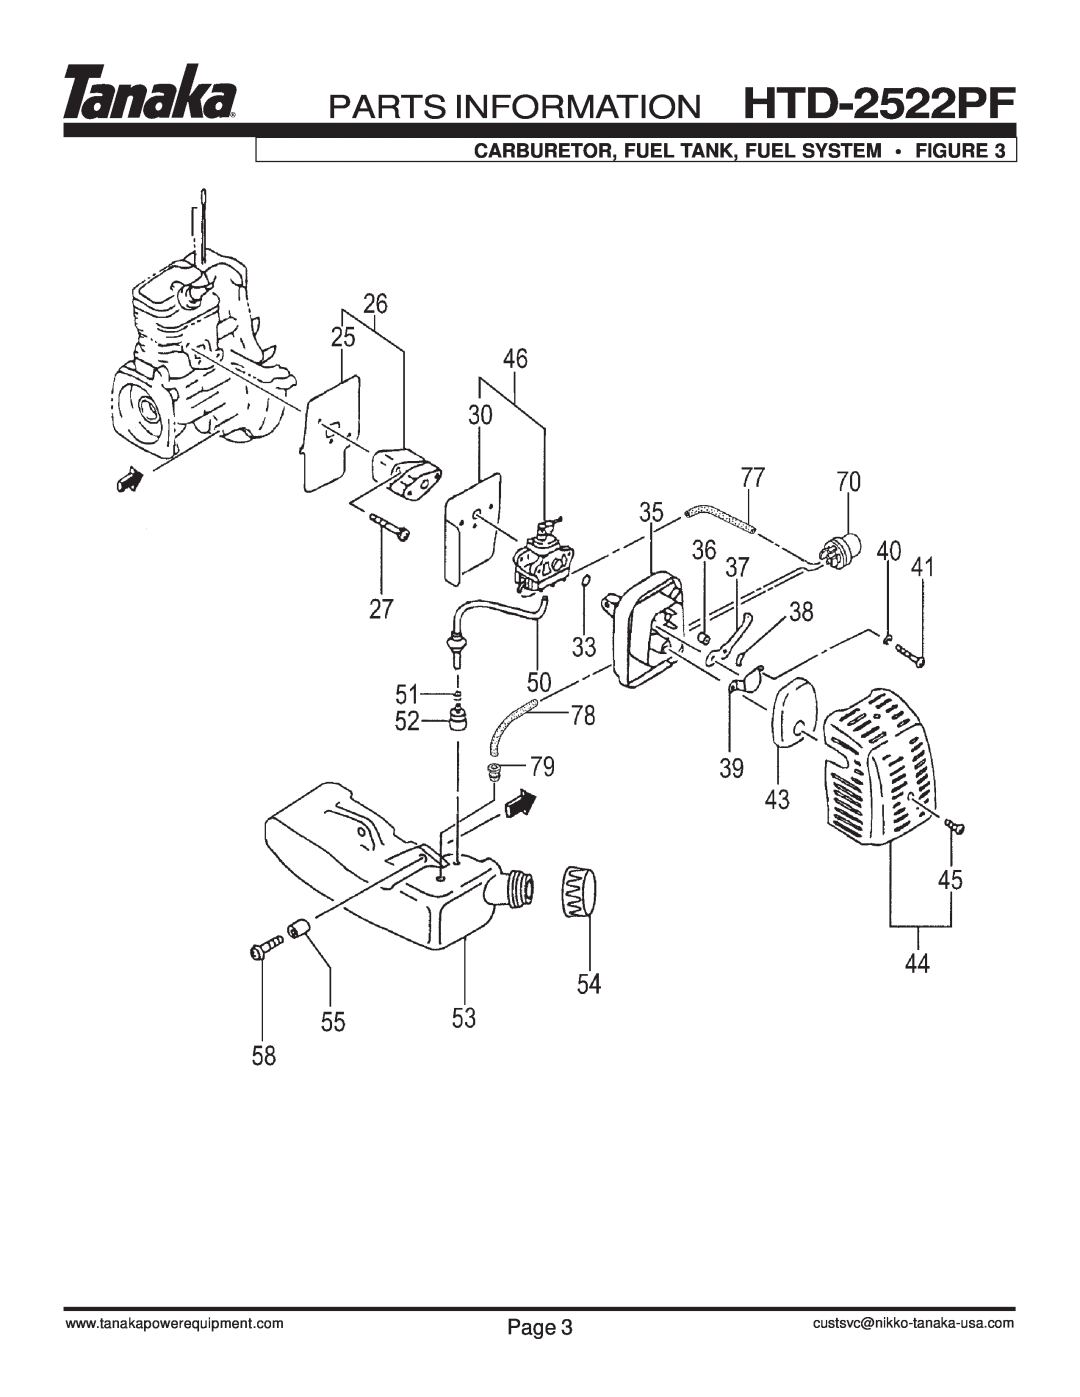 Tanaka Carburetor, Fuel Tank, Fuel System Figure, PARTS INFORMATION HTD-2522PF, Page, custsvc@nikko-tanaka-usa.com 